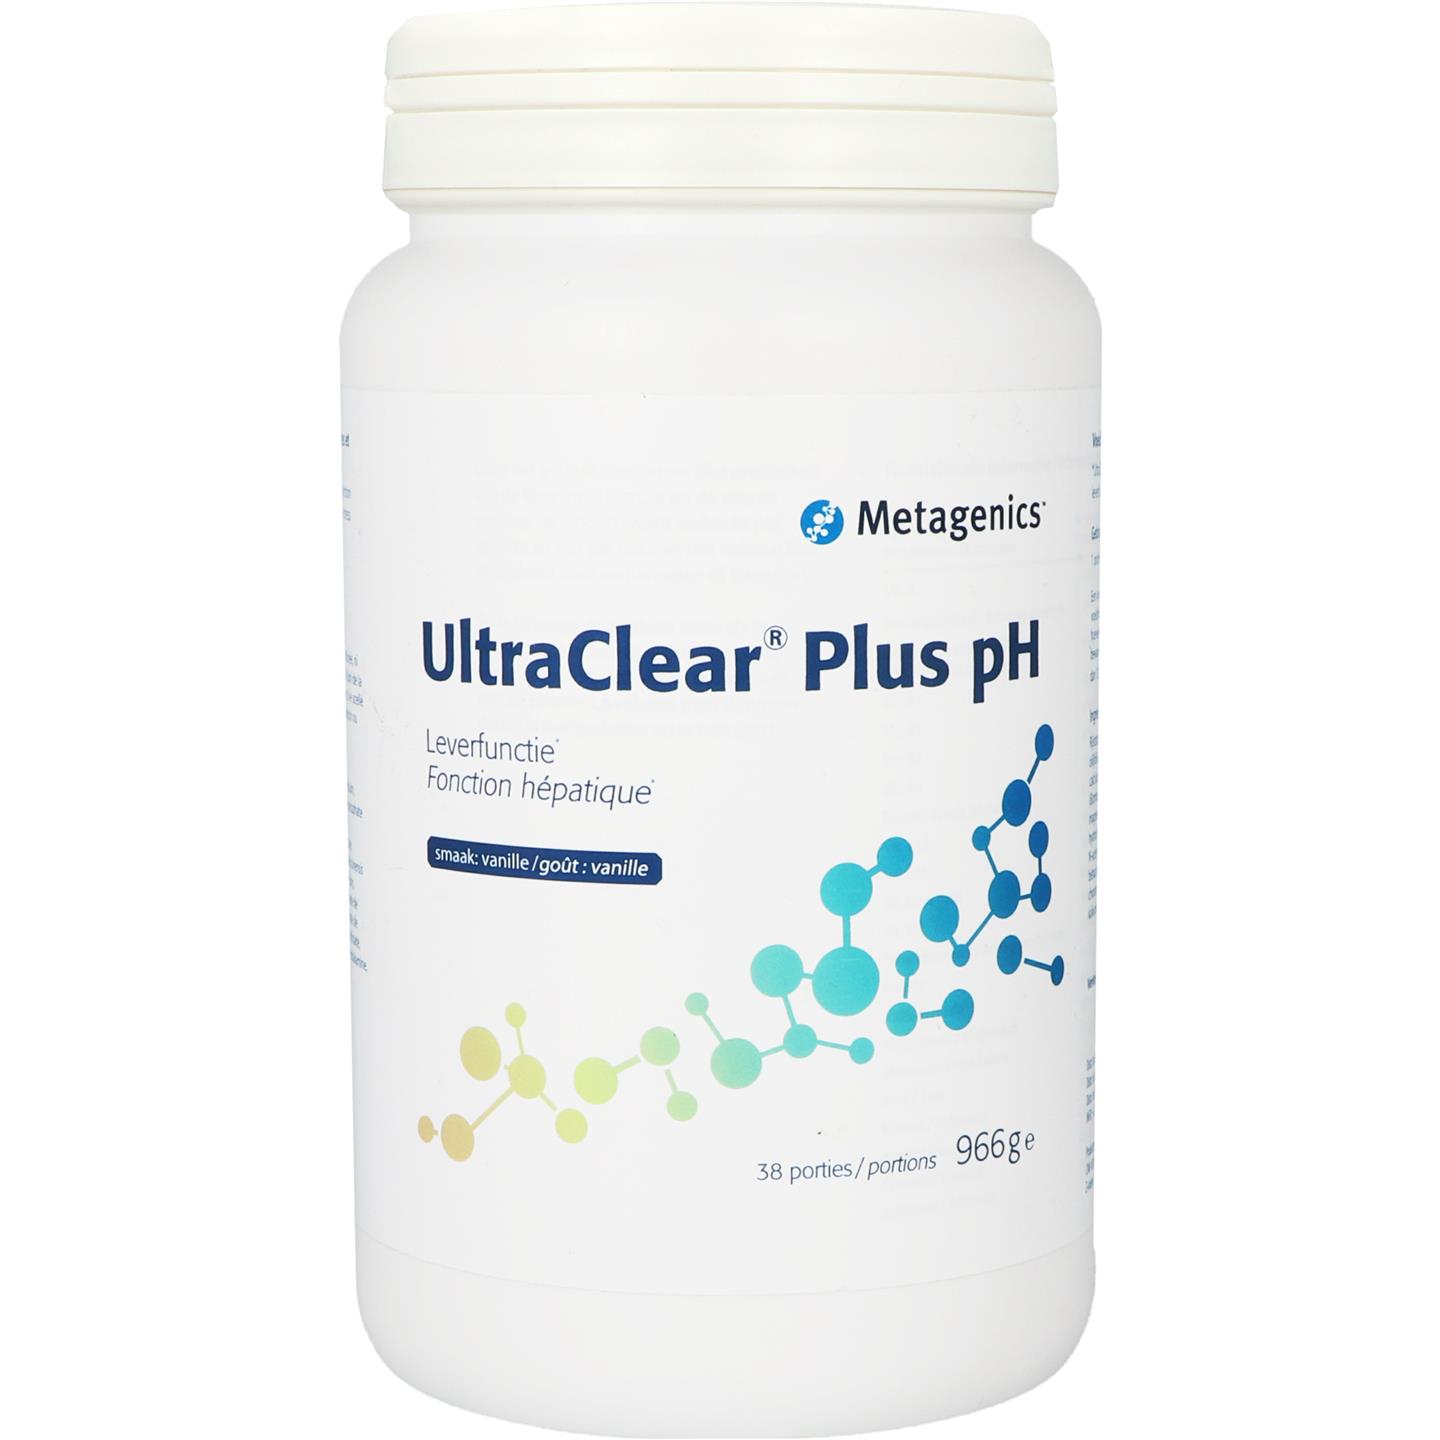 UltraClear Plus pH vanille